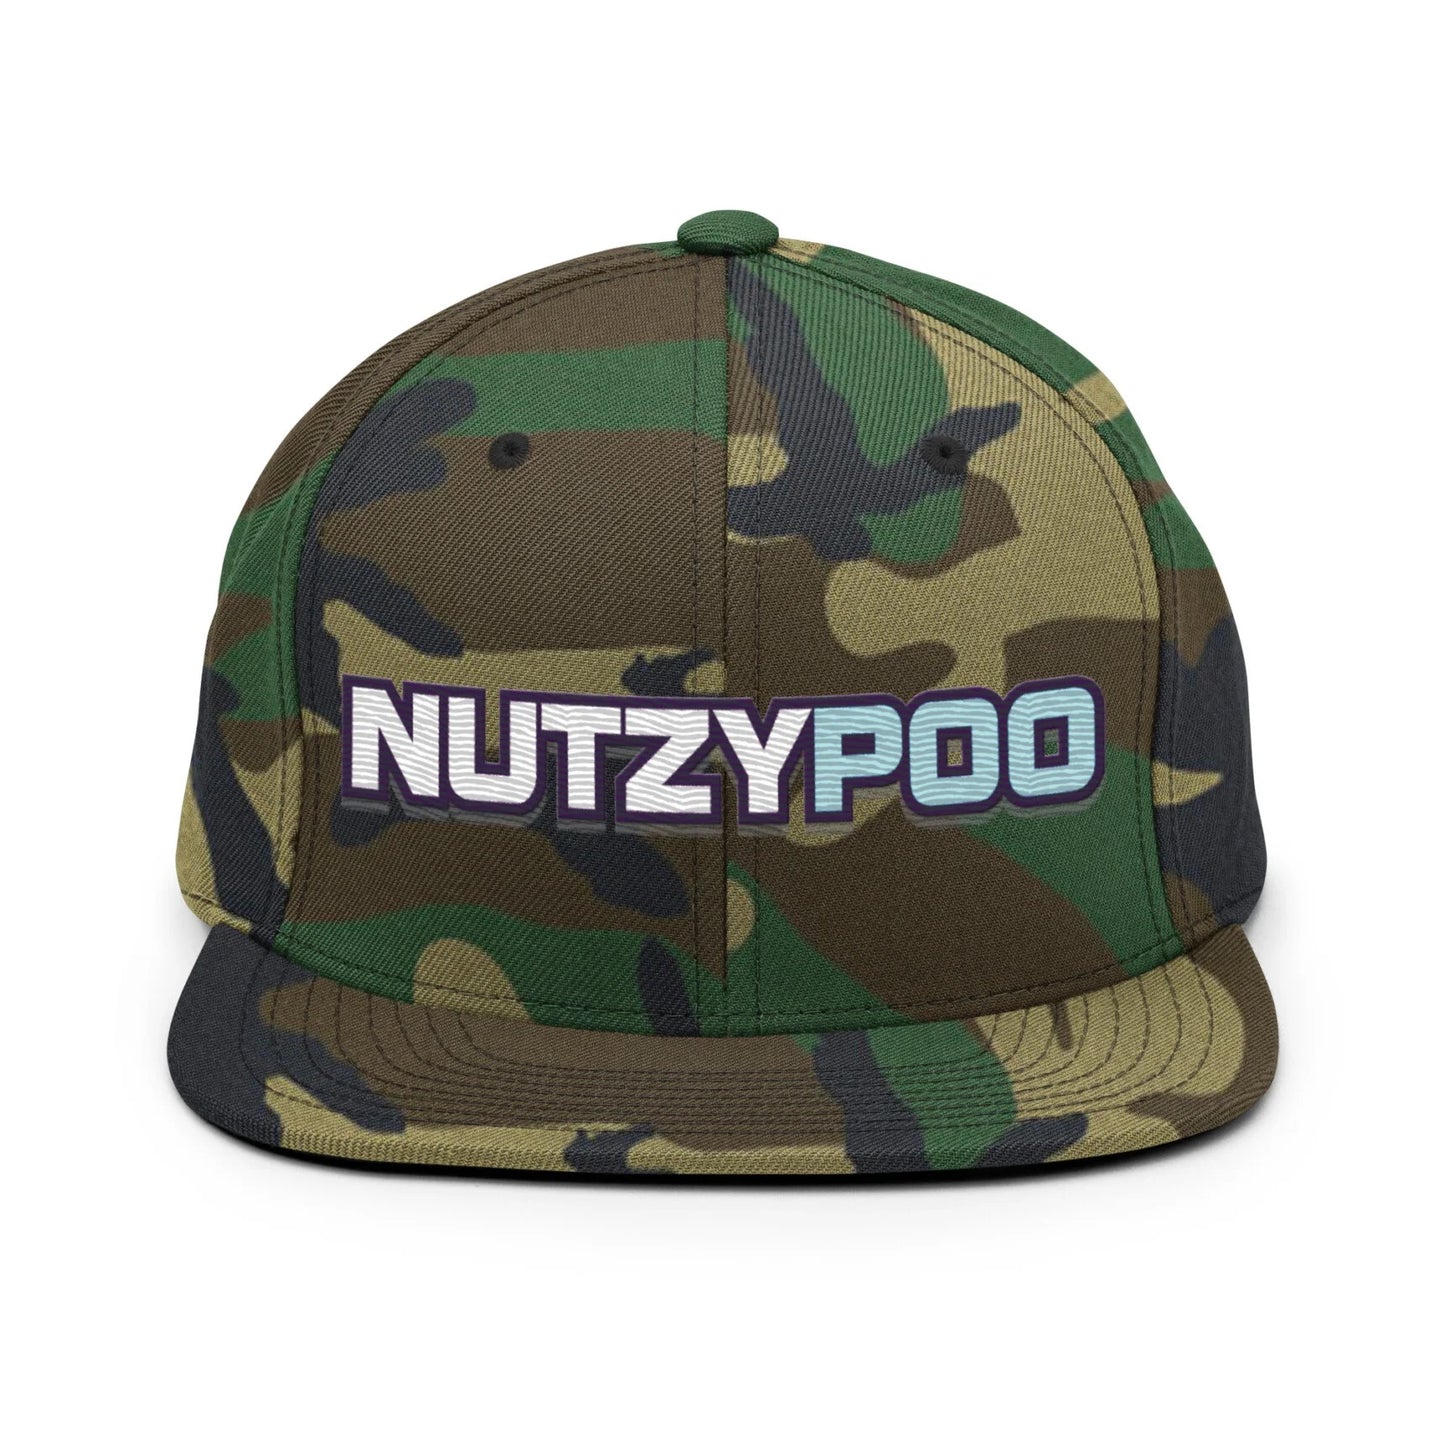 NutzyPoo ShowZone hat in green camo Camoflauge design